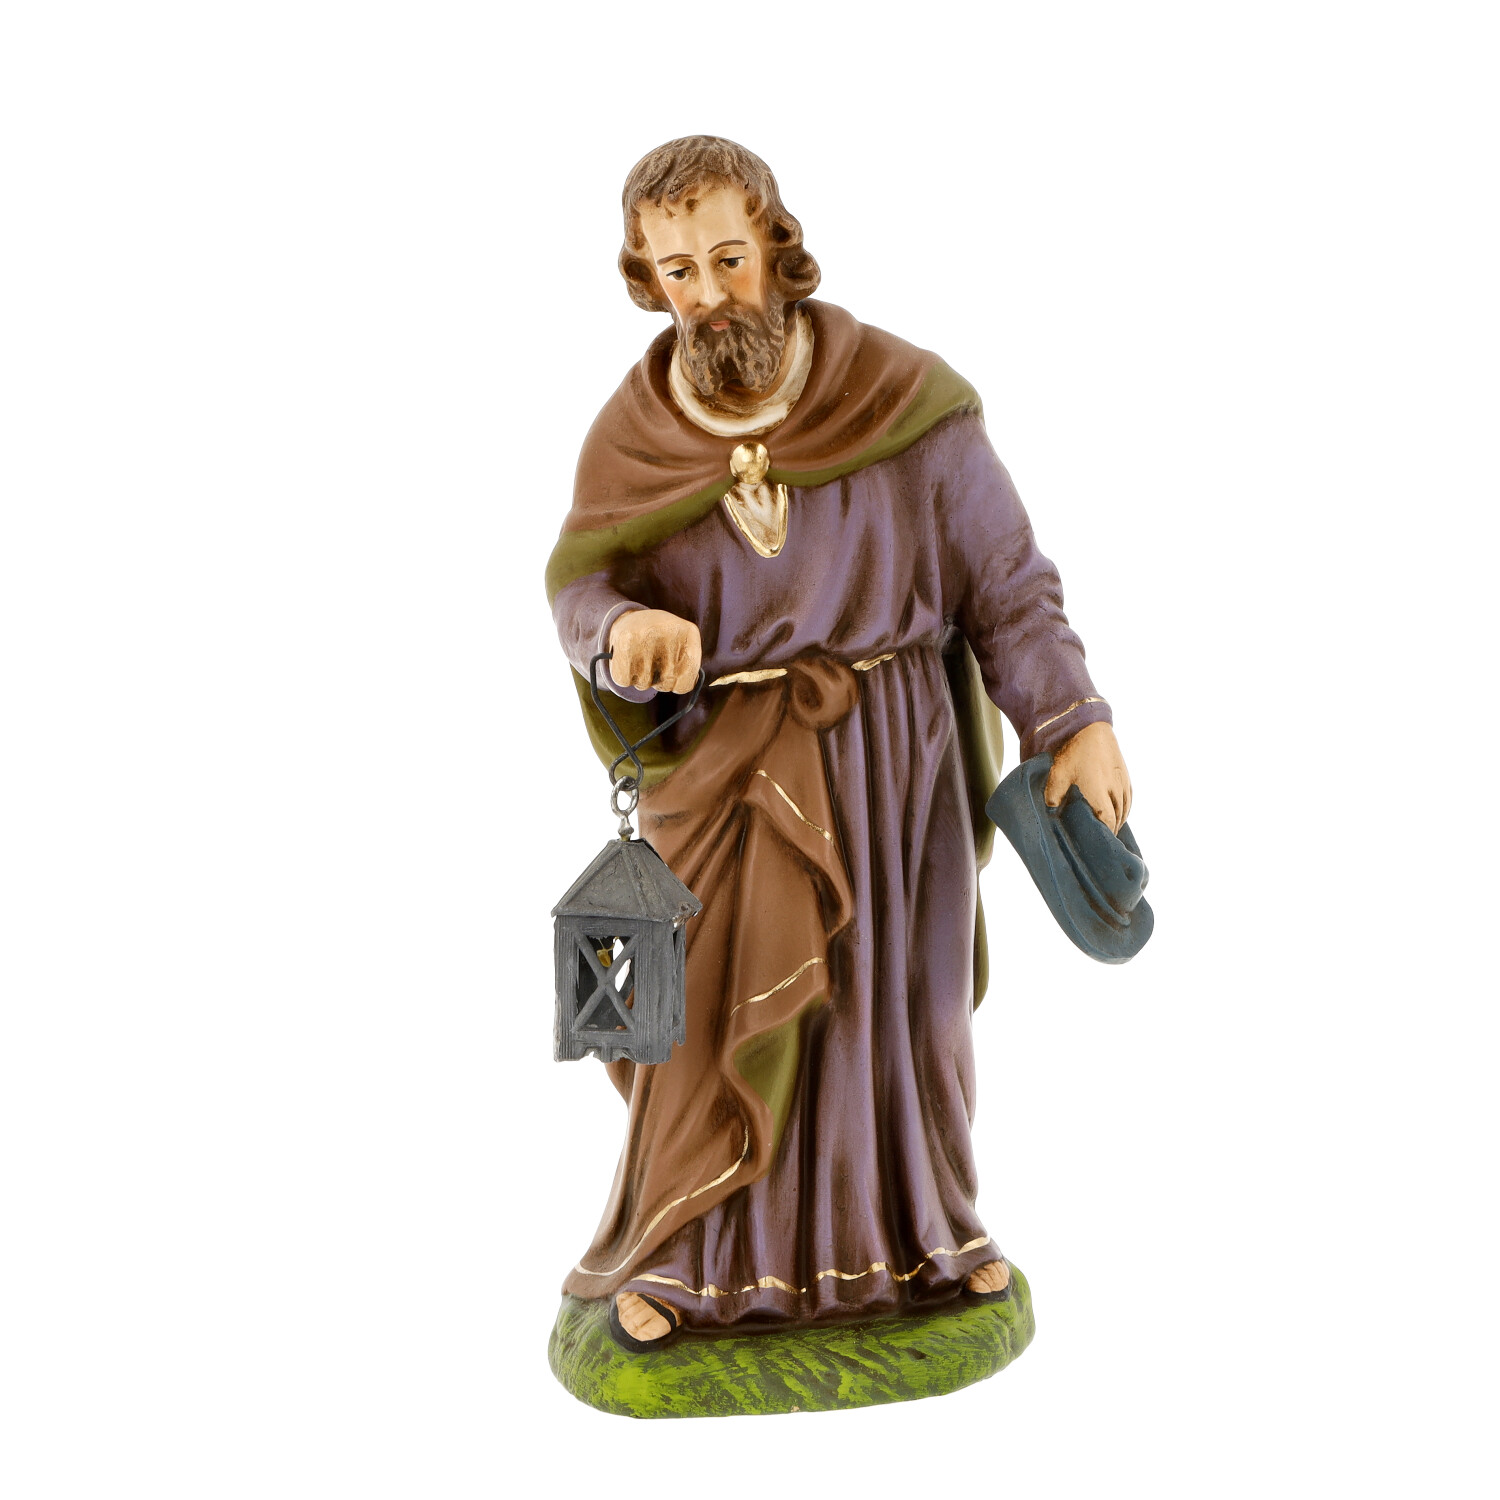 Joseph with lantern - Marolin Nativity figure - made in Germany